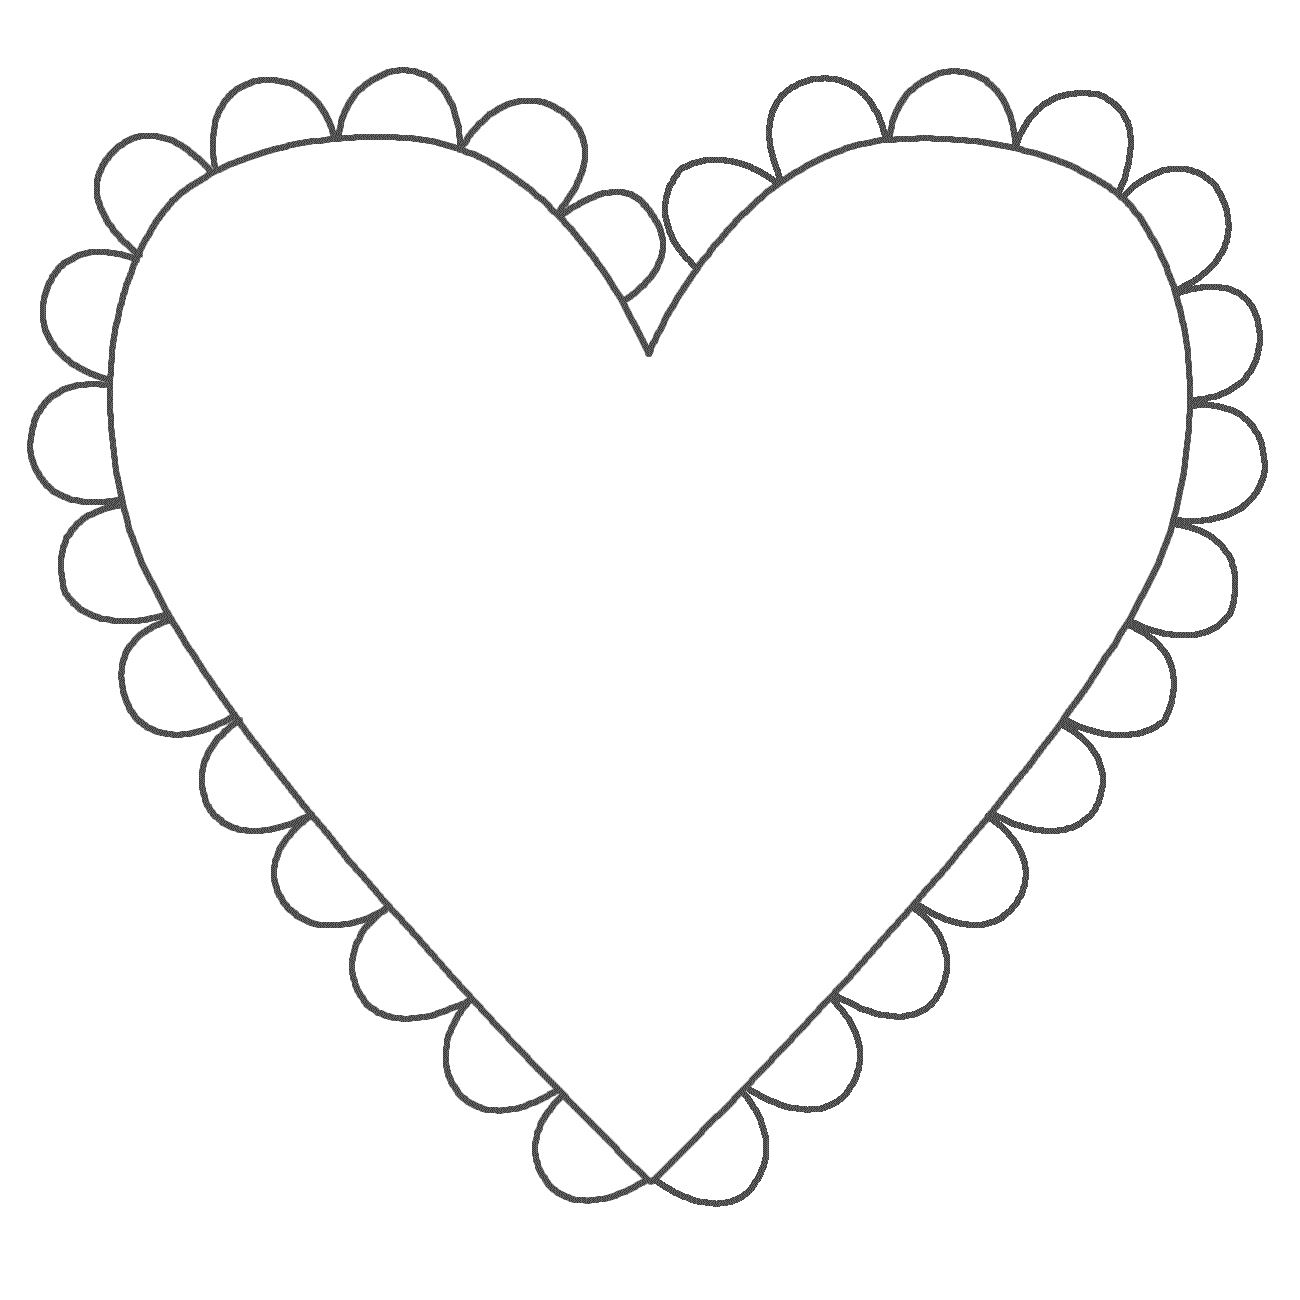 Heart shape coloring pages - Coloring Pages & Pictures - IMAGIXS